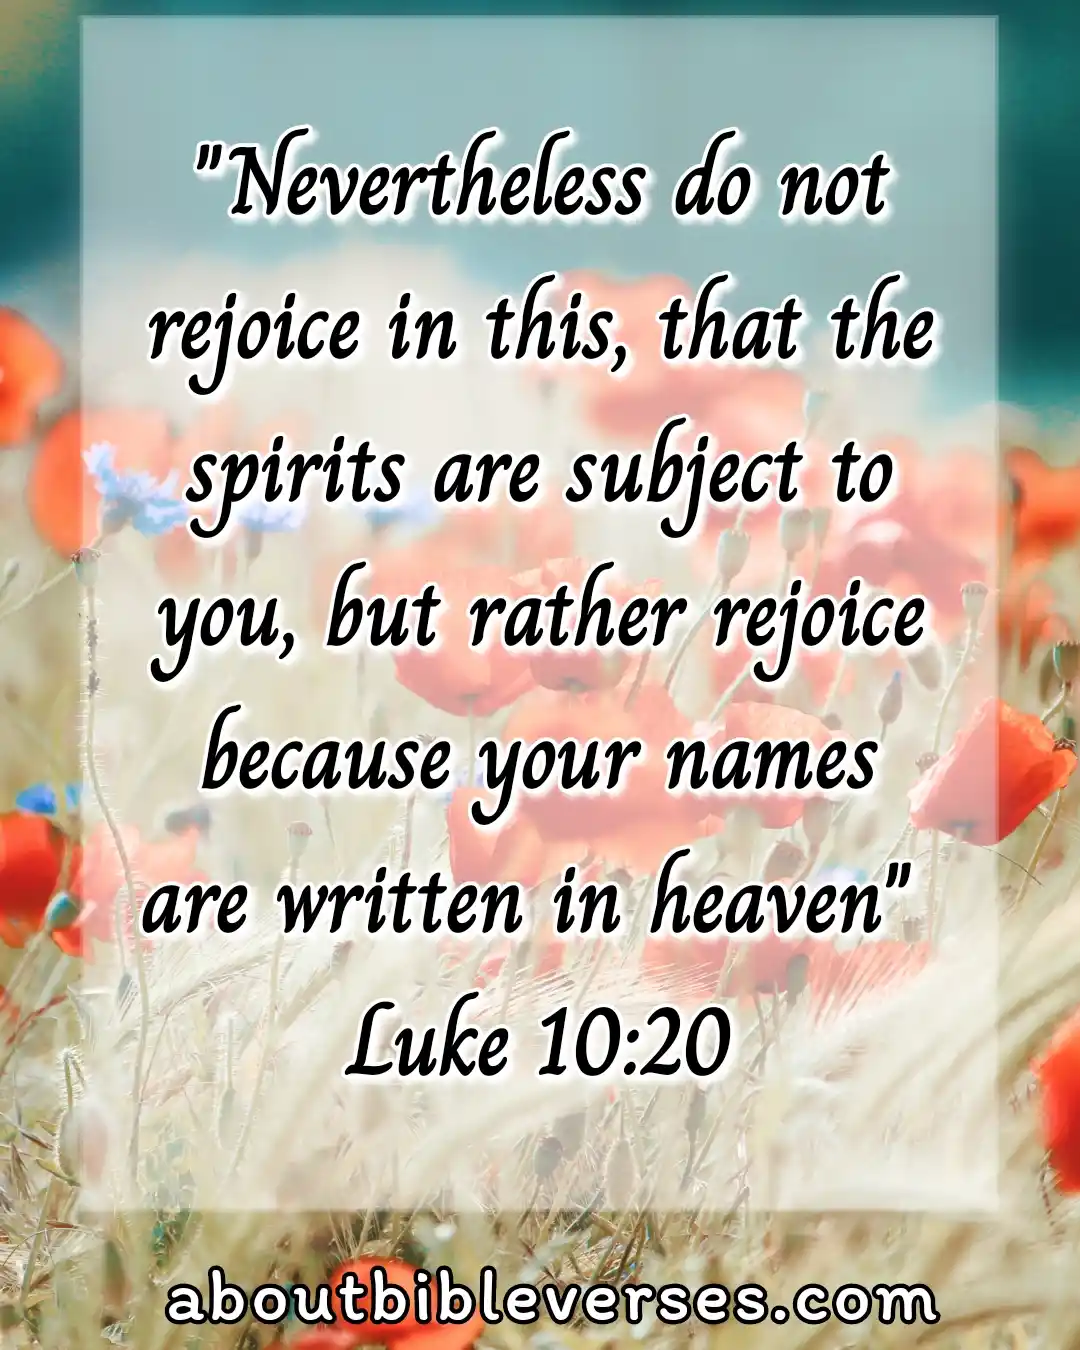 Bible Verses About Heaven (Luke 10:20)